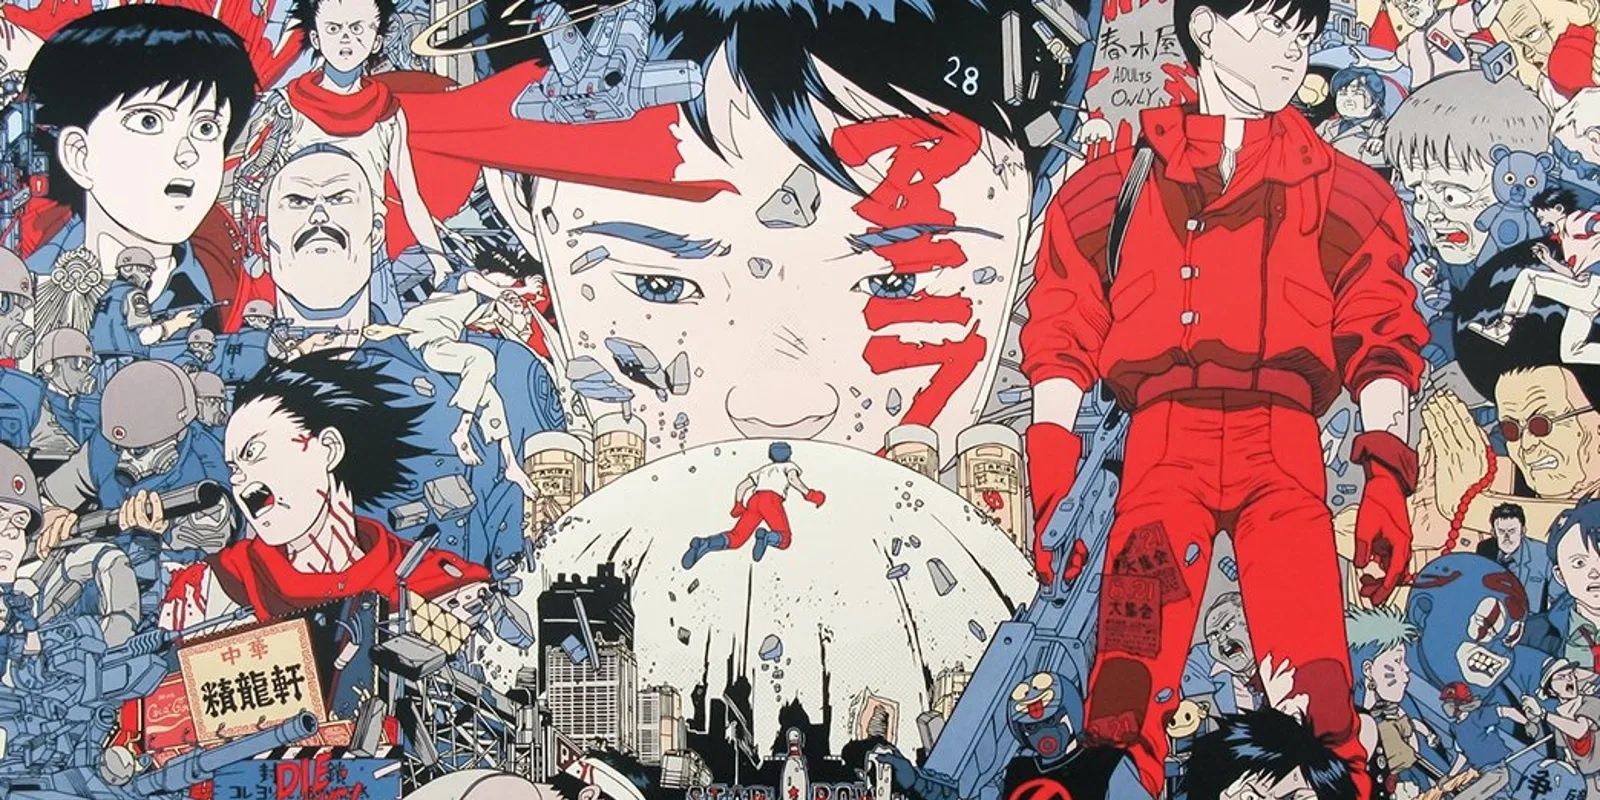 A splash panel of the colored version of Katsuhiro Otomo's Akira manga.